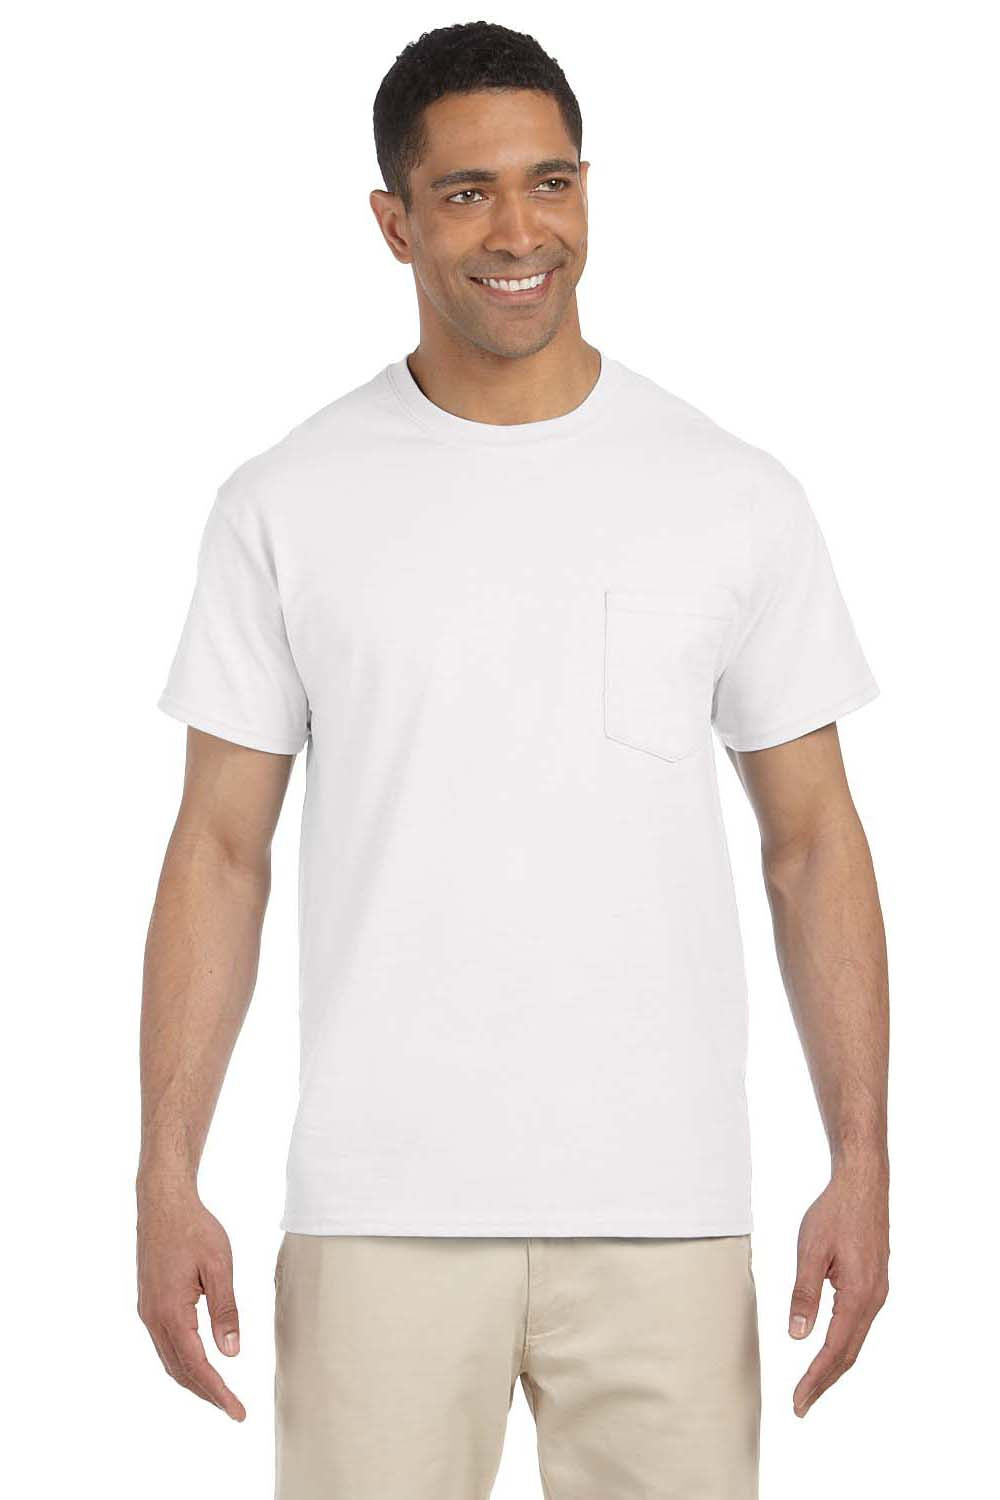 Gildan G230 Mens Ultra Short Sleeve Crewneck T-Shirt w/ Pocket White Front